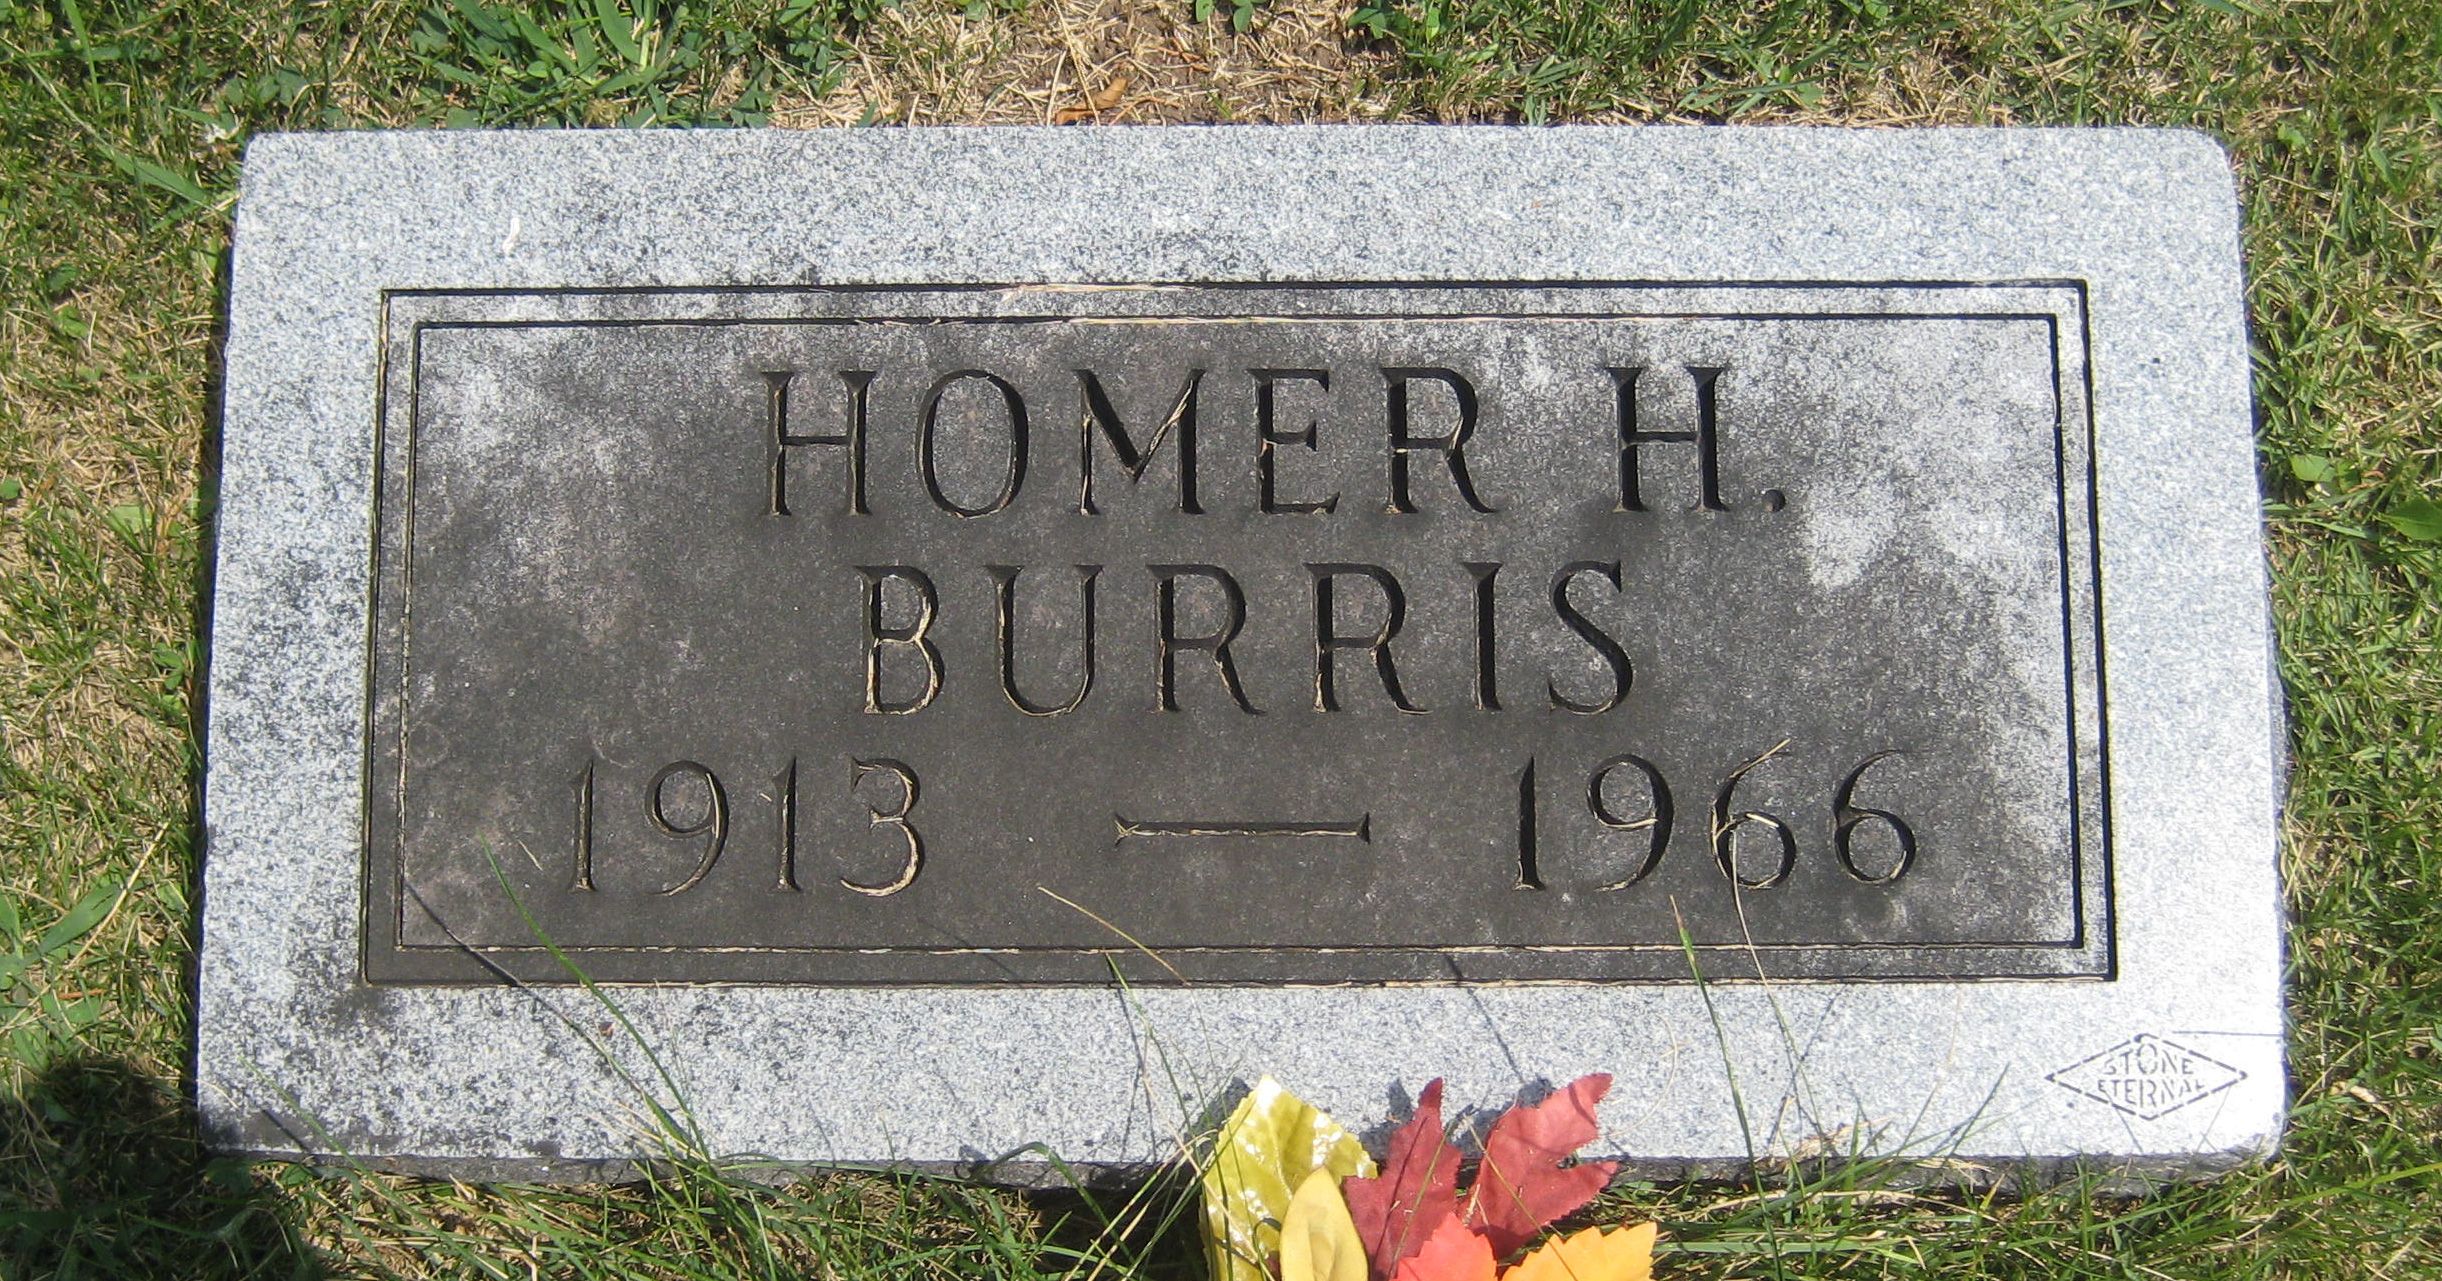 Homer Howard Burris (1913-1966)